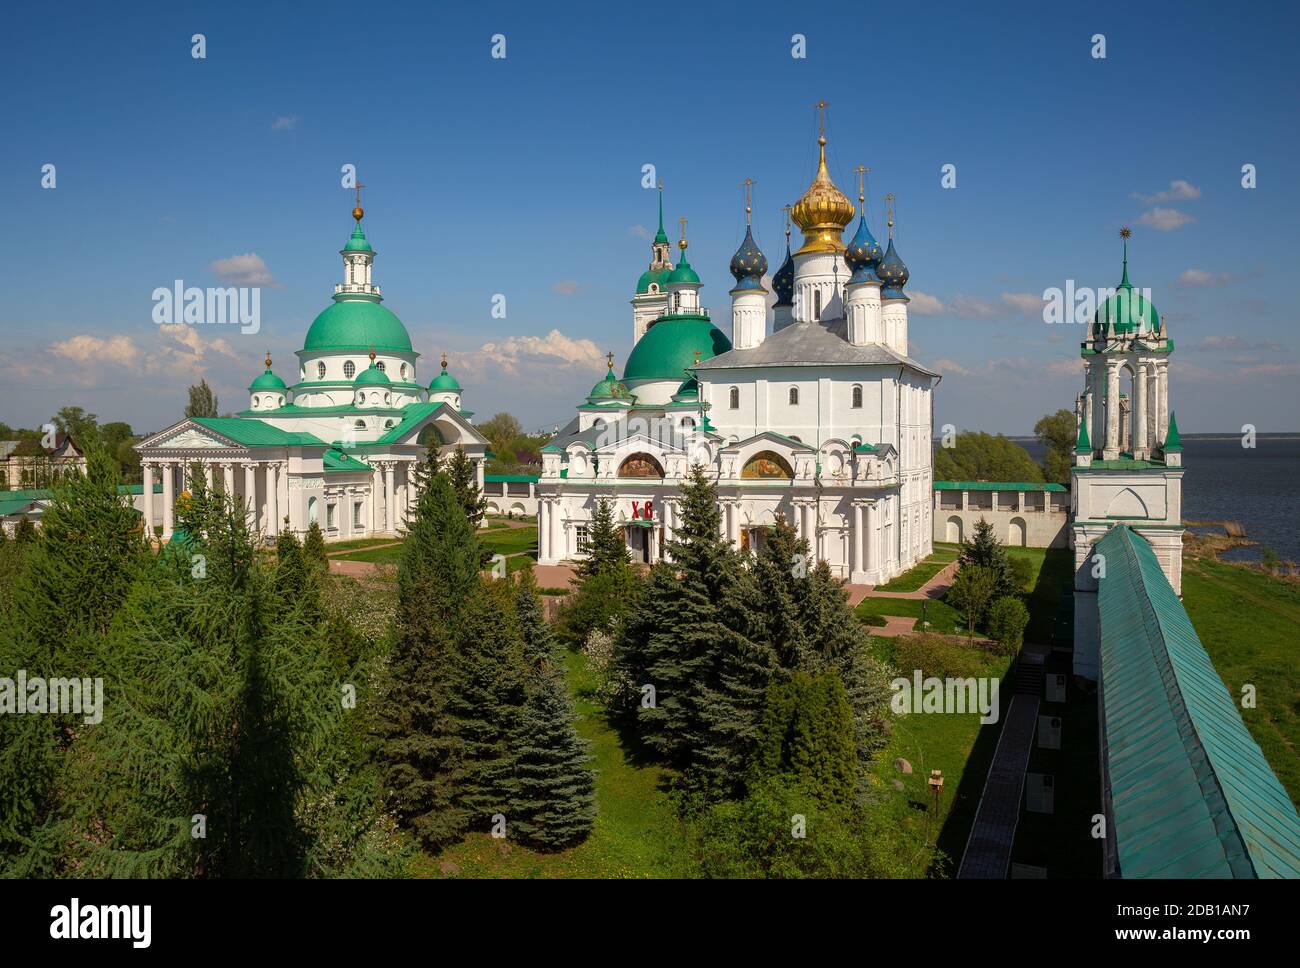 Spaso-Yakovlevsky Dimitriev Monastery (Monastery of St. Jacob Saviour). Rostov Velikiy, Yaroslavl region, Golden ring of Russia Stock Photo